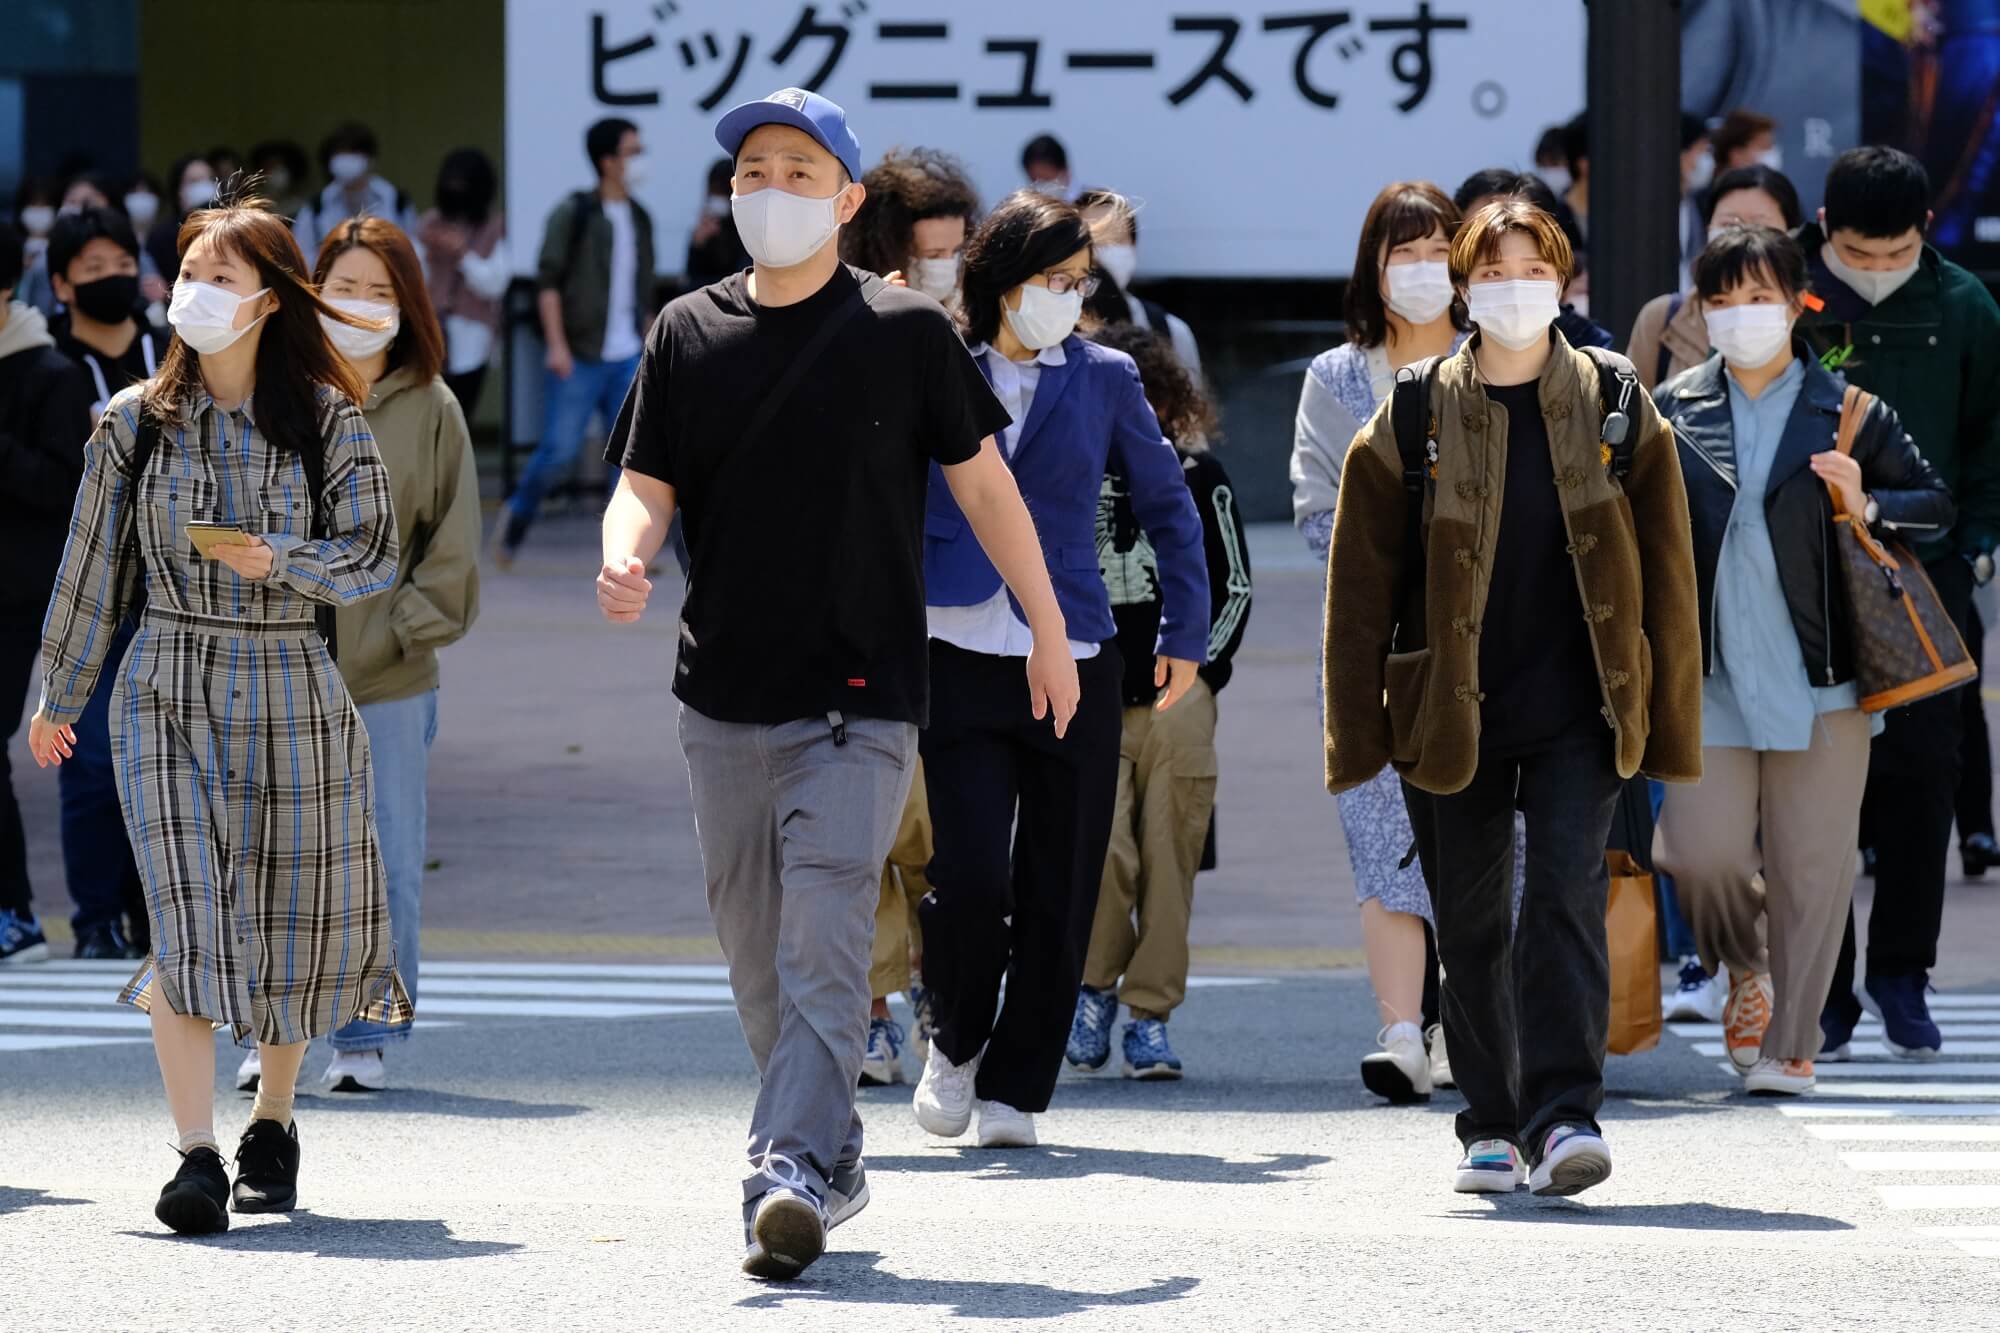 Japan’s prolonged border closure hurting students, universities, the economy